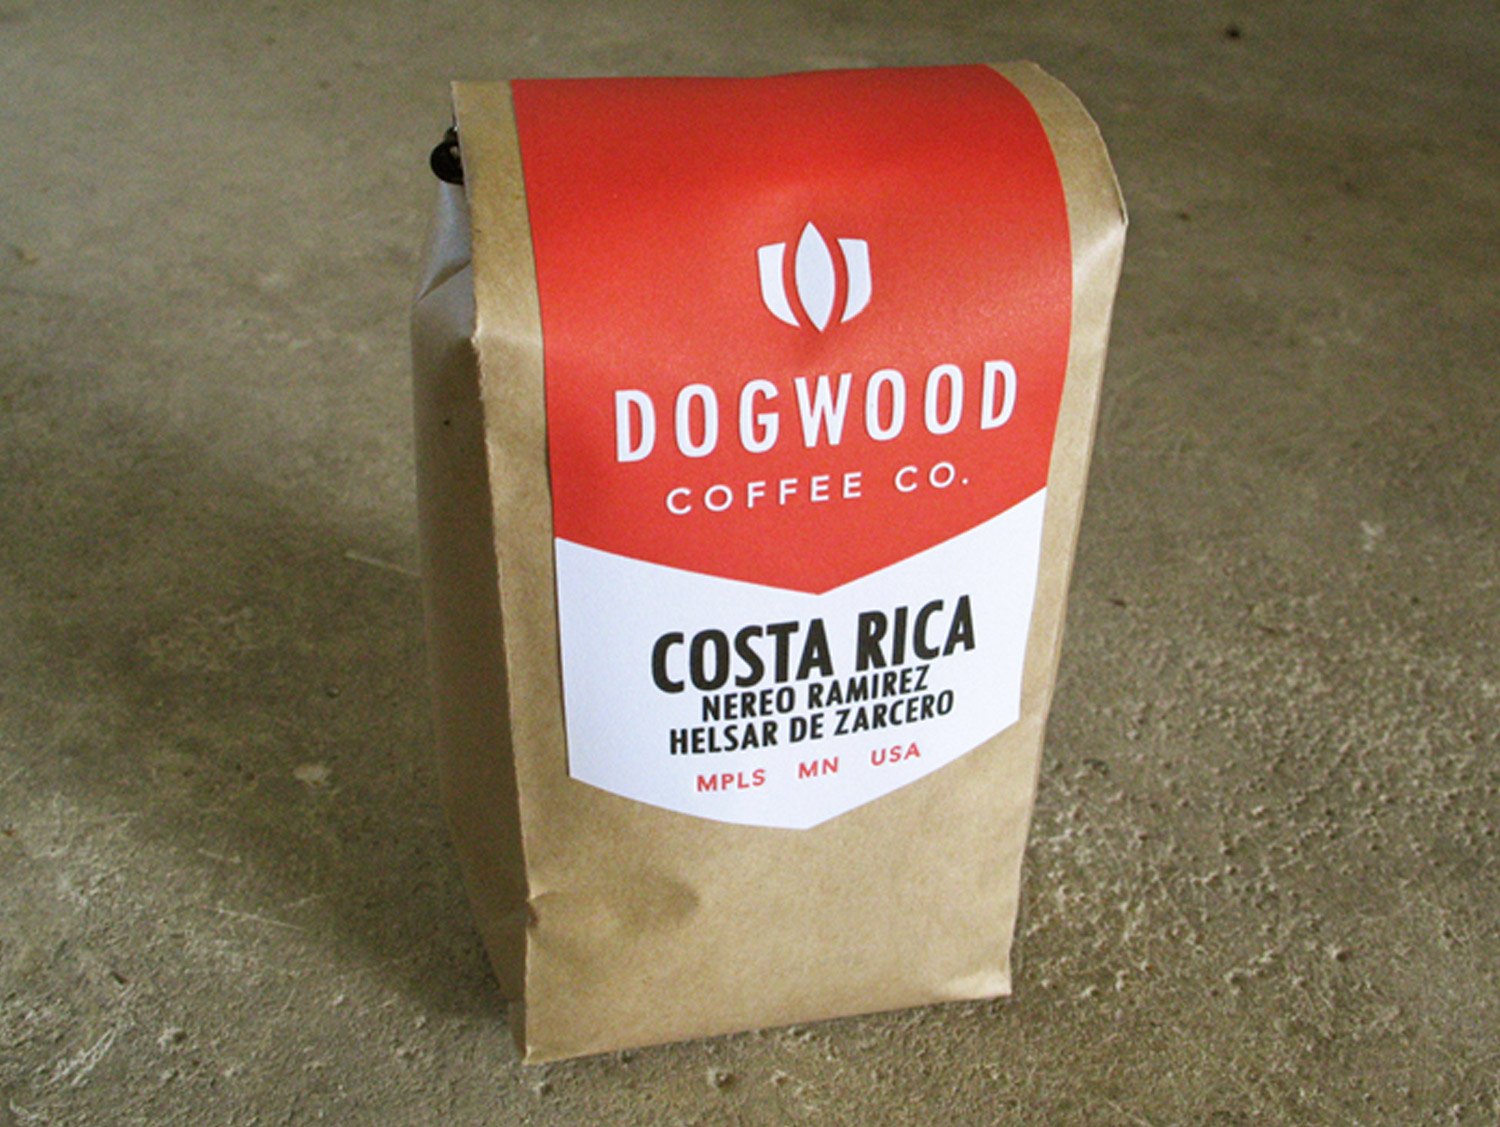 Dogwood-Coffee-Co-13-Packaging-01.jpg